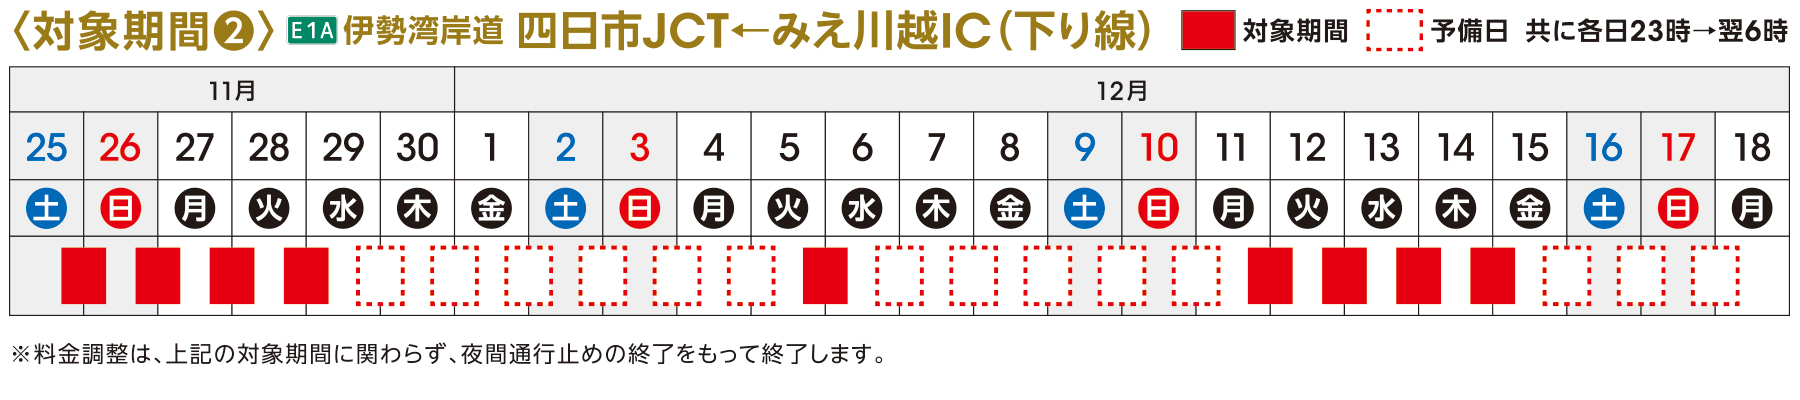 E23 東名阪道・C2 名二環の迂回ルート図